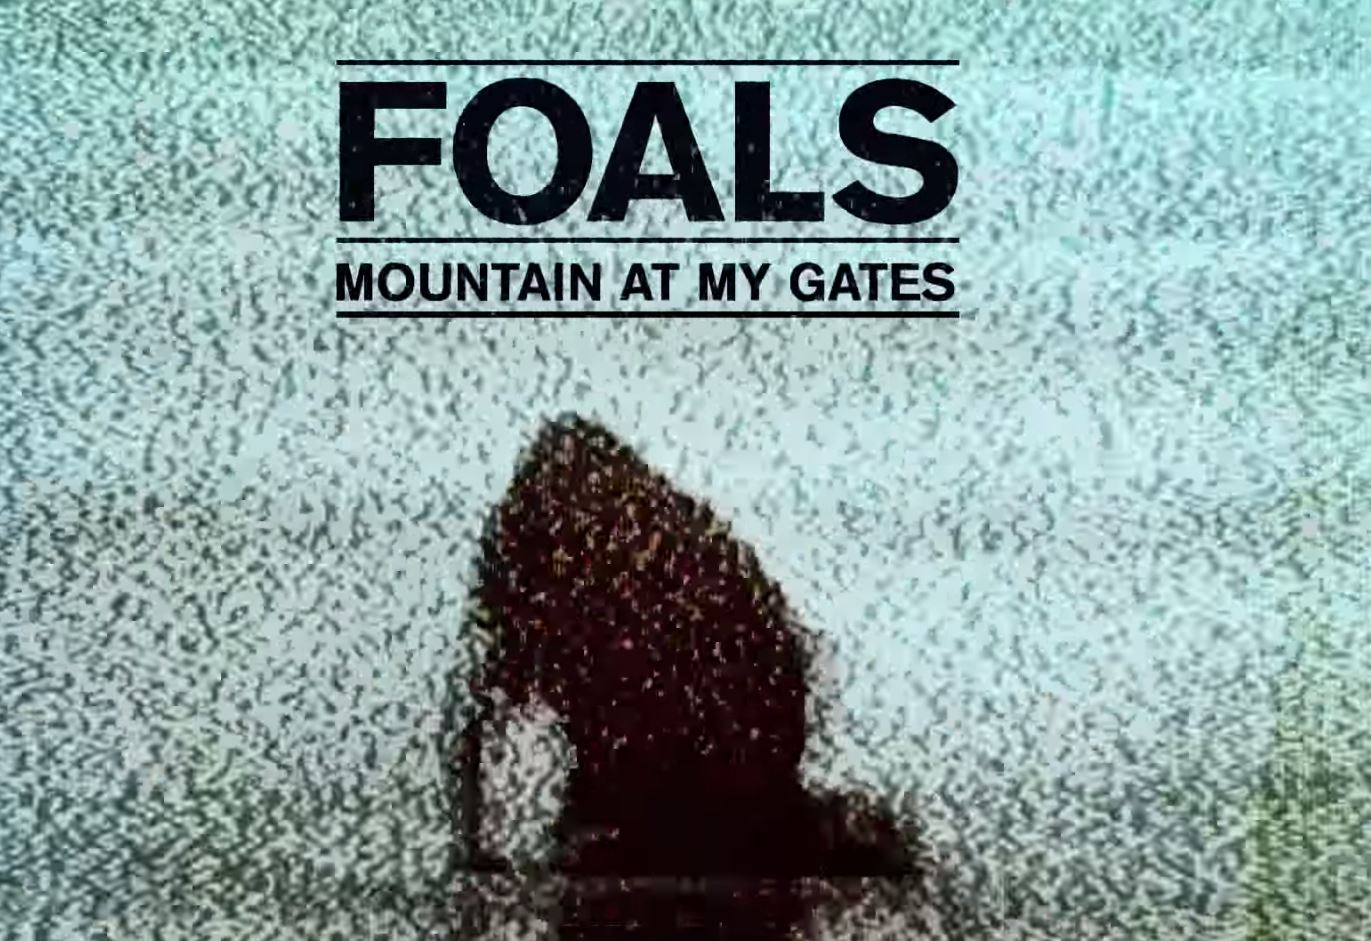 Foals - Mountain at my Gates via YouTube screen cap